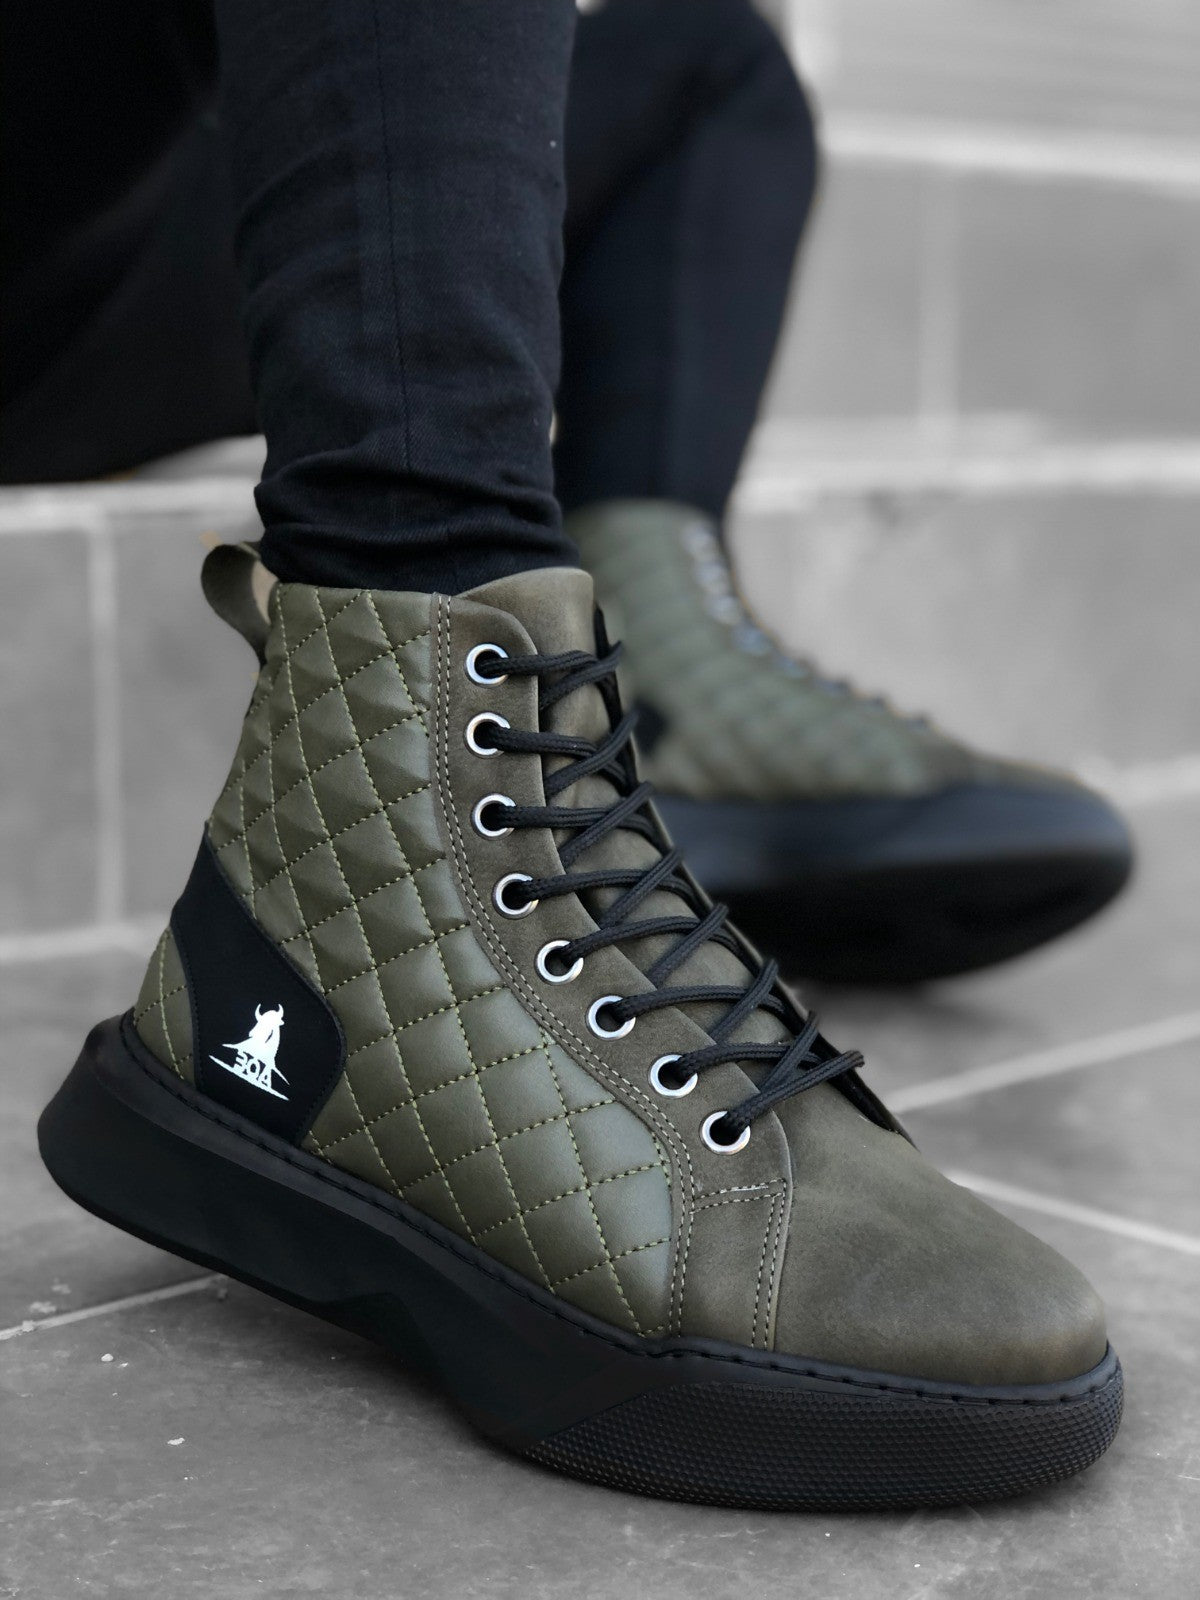 BA0159 Lace-Up Men's High Sole Sneaker Sport Boots - STREET MODE ™